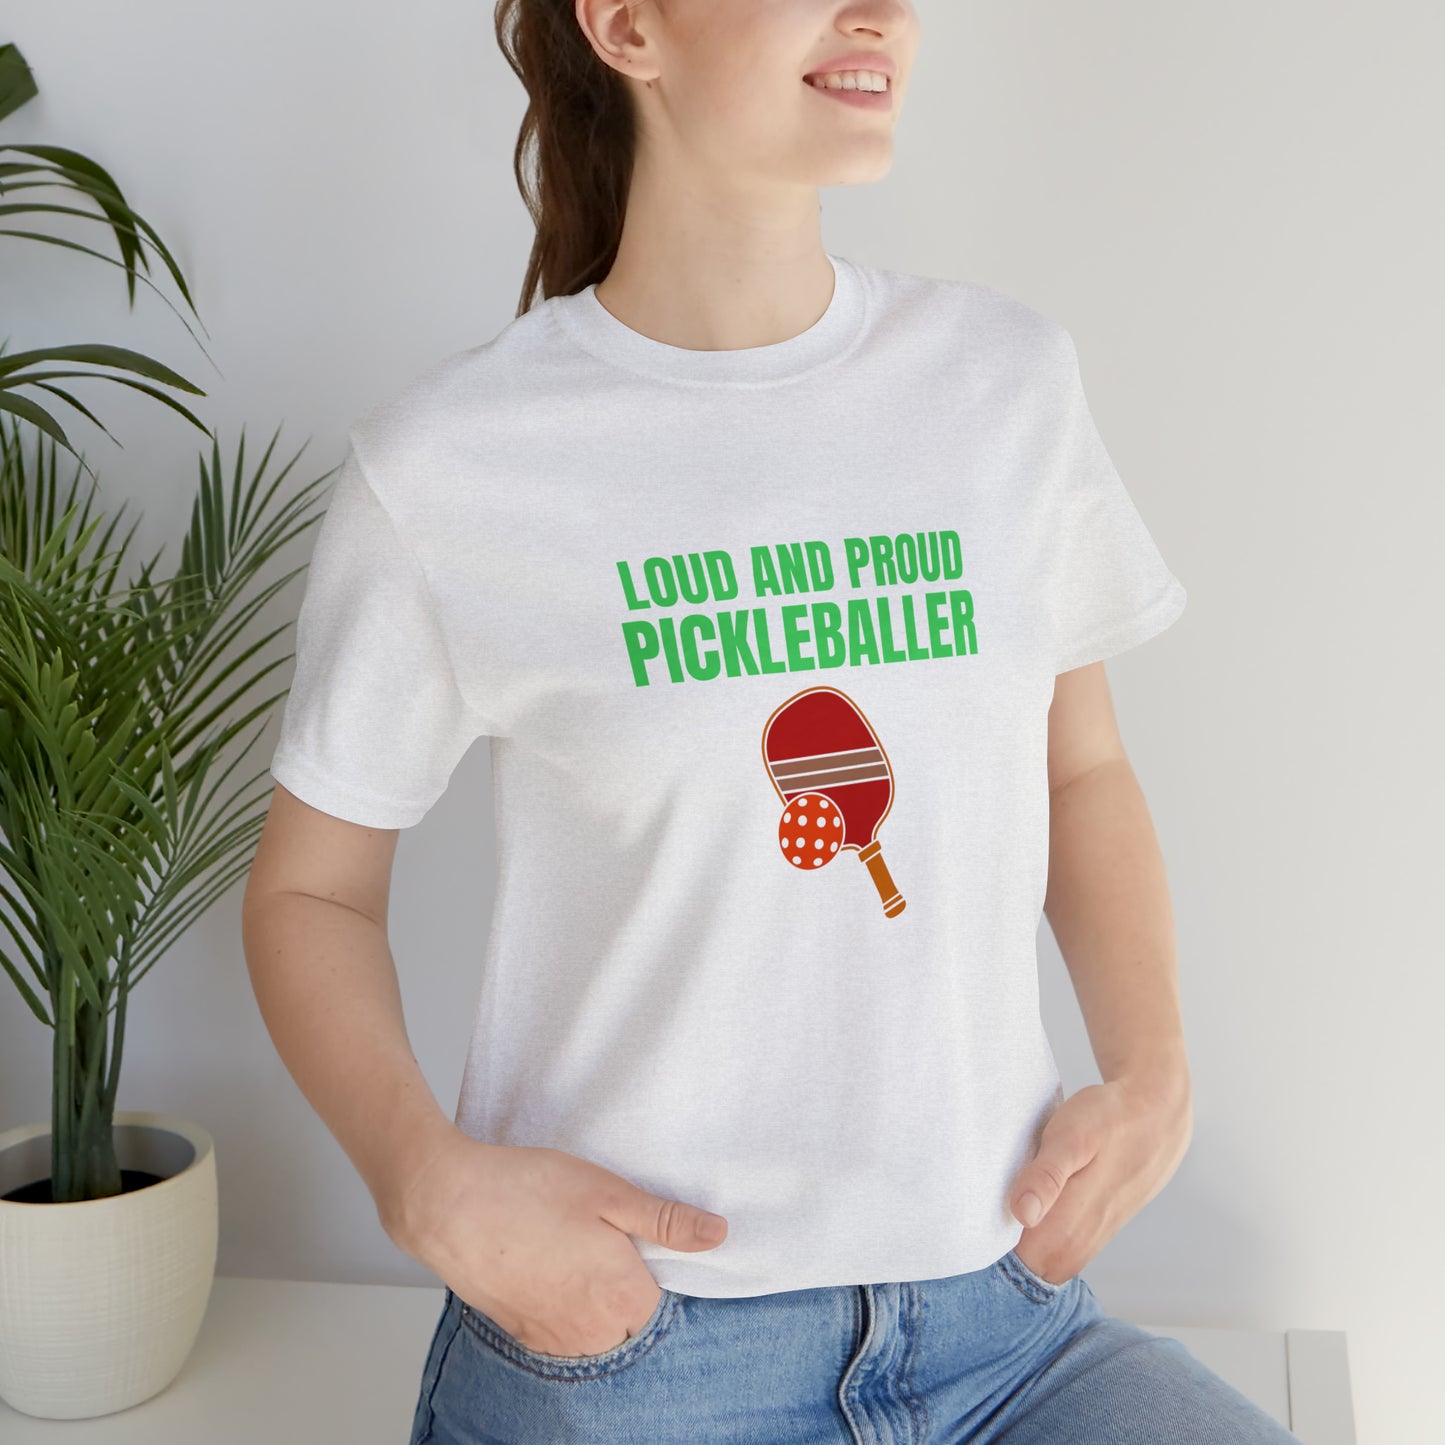 Loud and Proud Pickleball T-Shirt